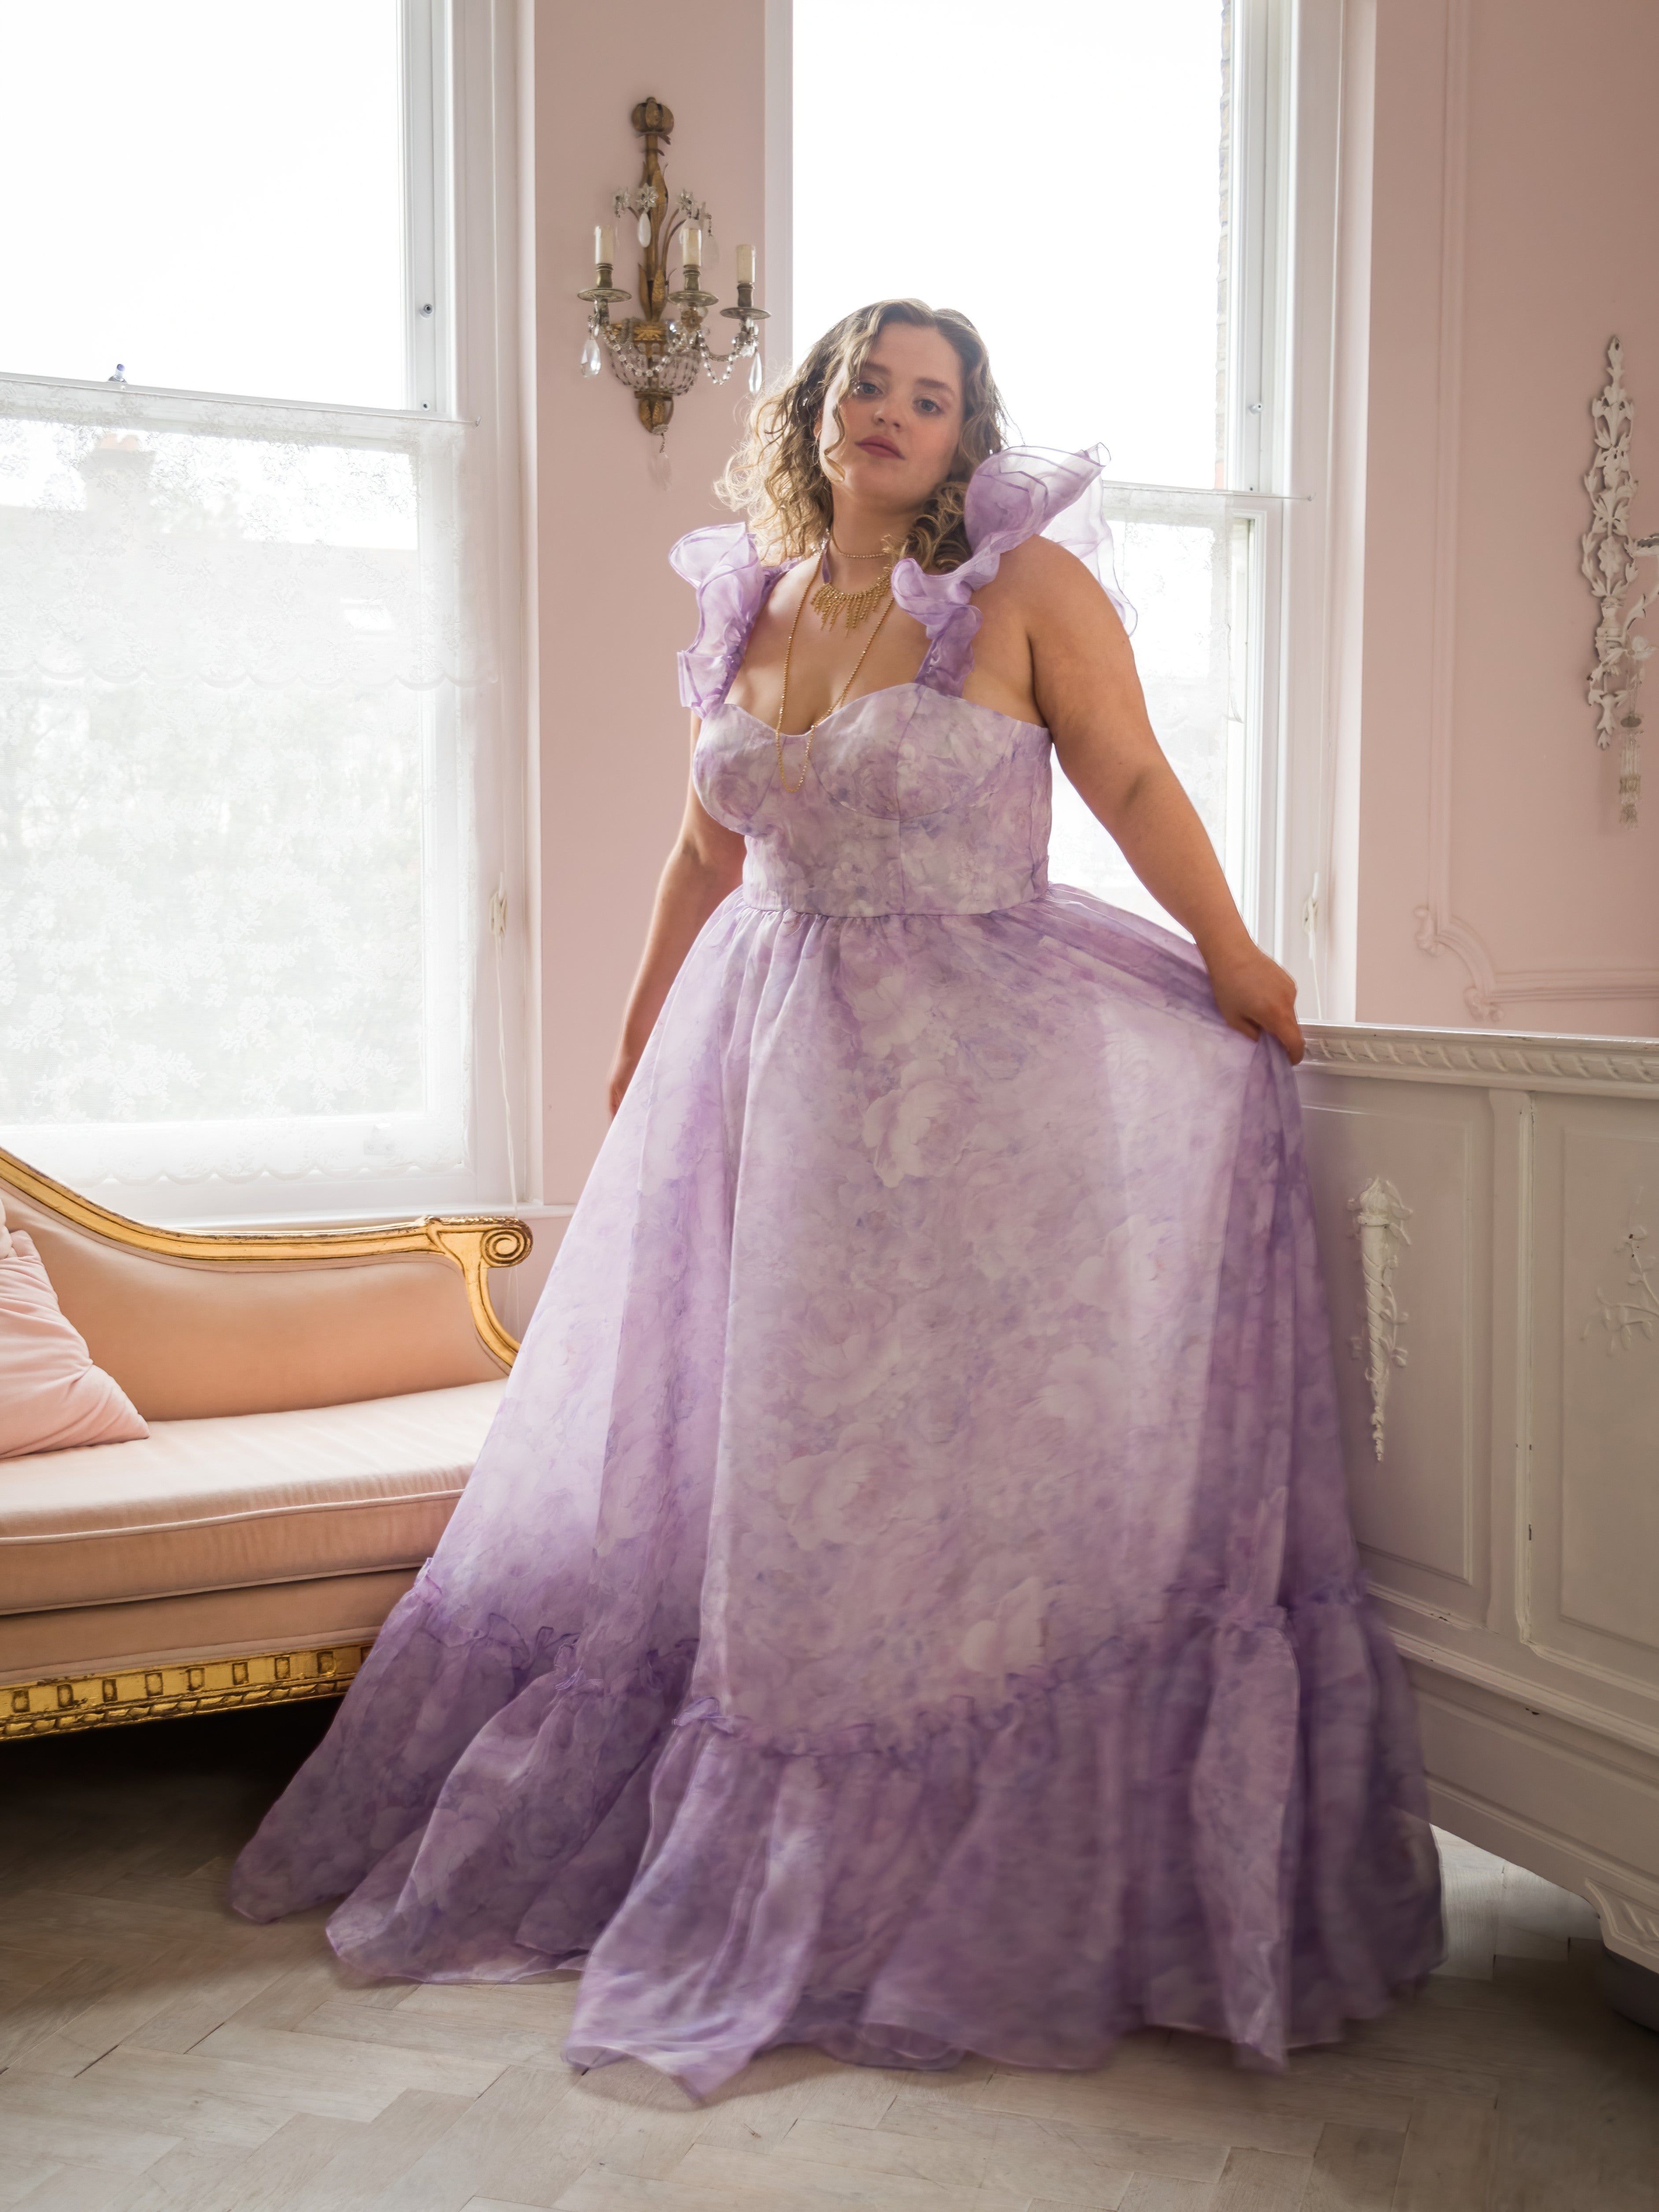 The Violet Enchantress Gown